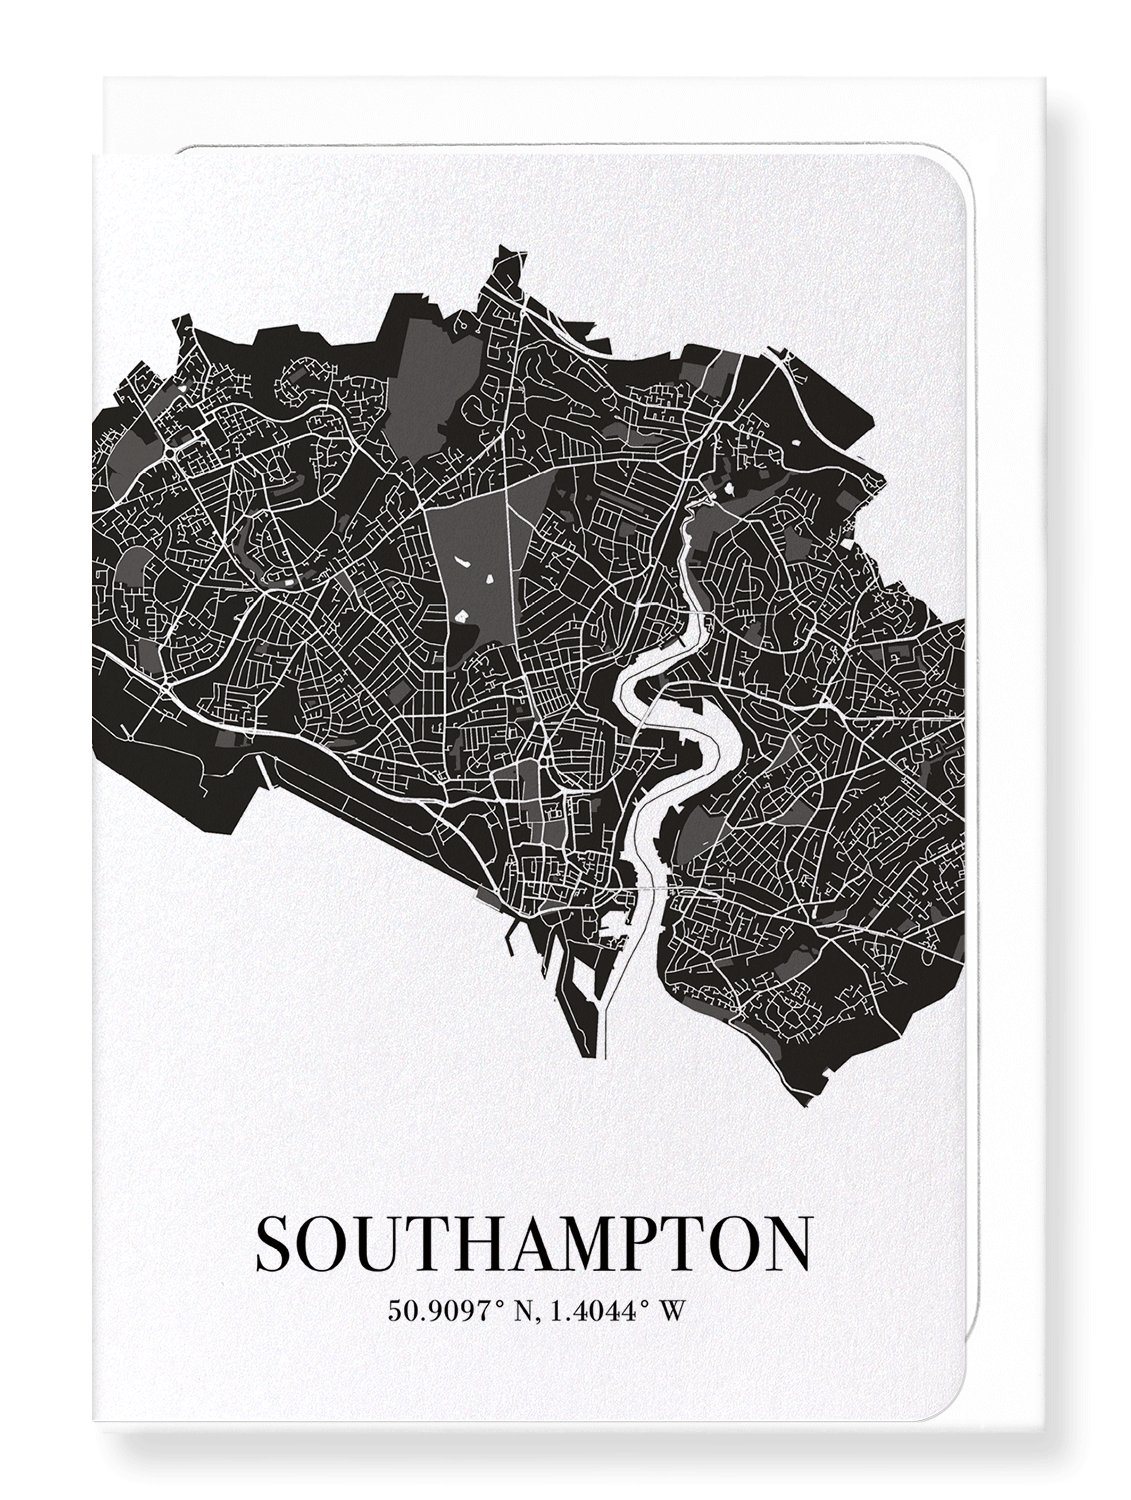 SOUTHAMPTON CUTOUT: Map Cutout Greeting Card